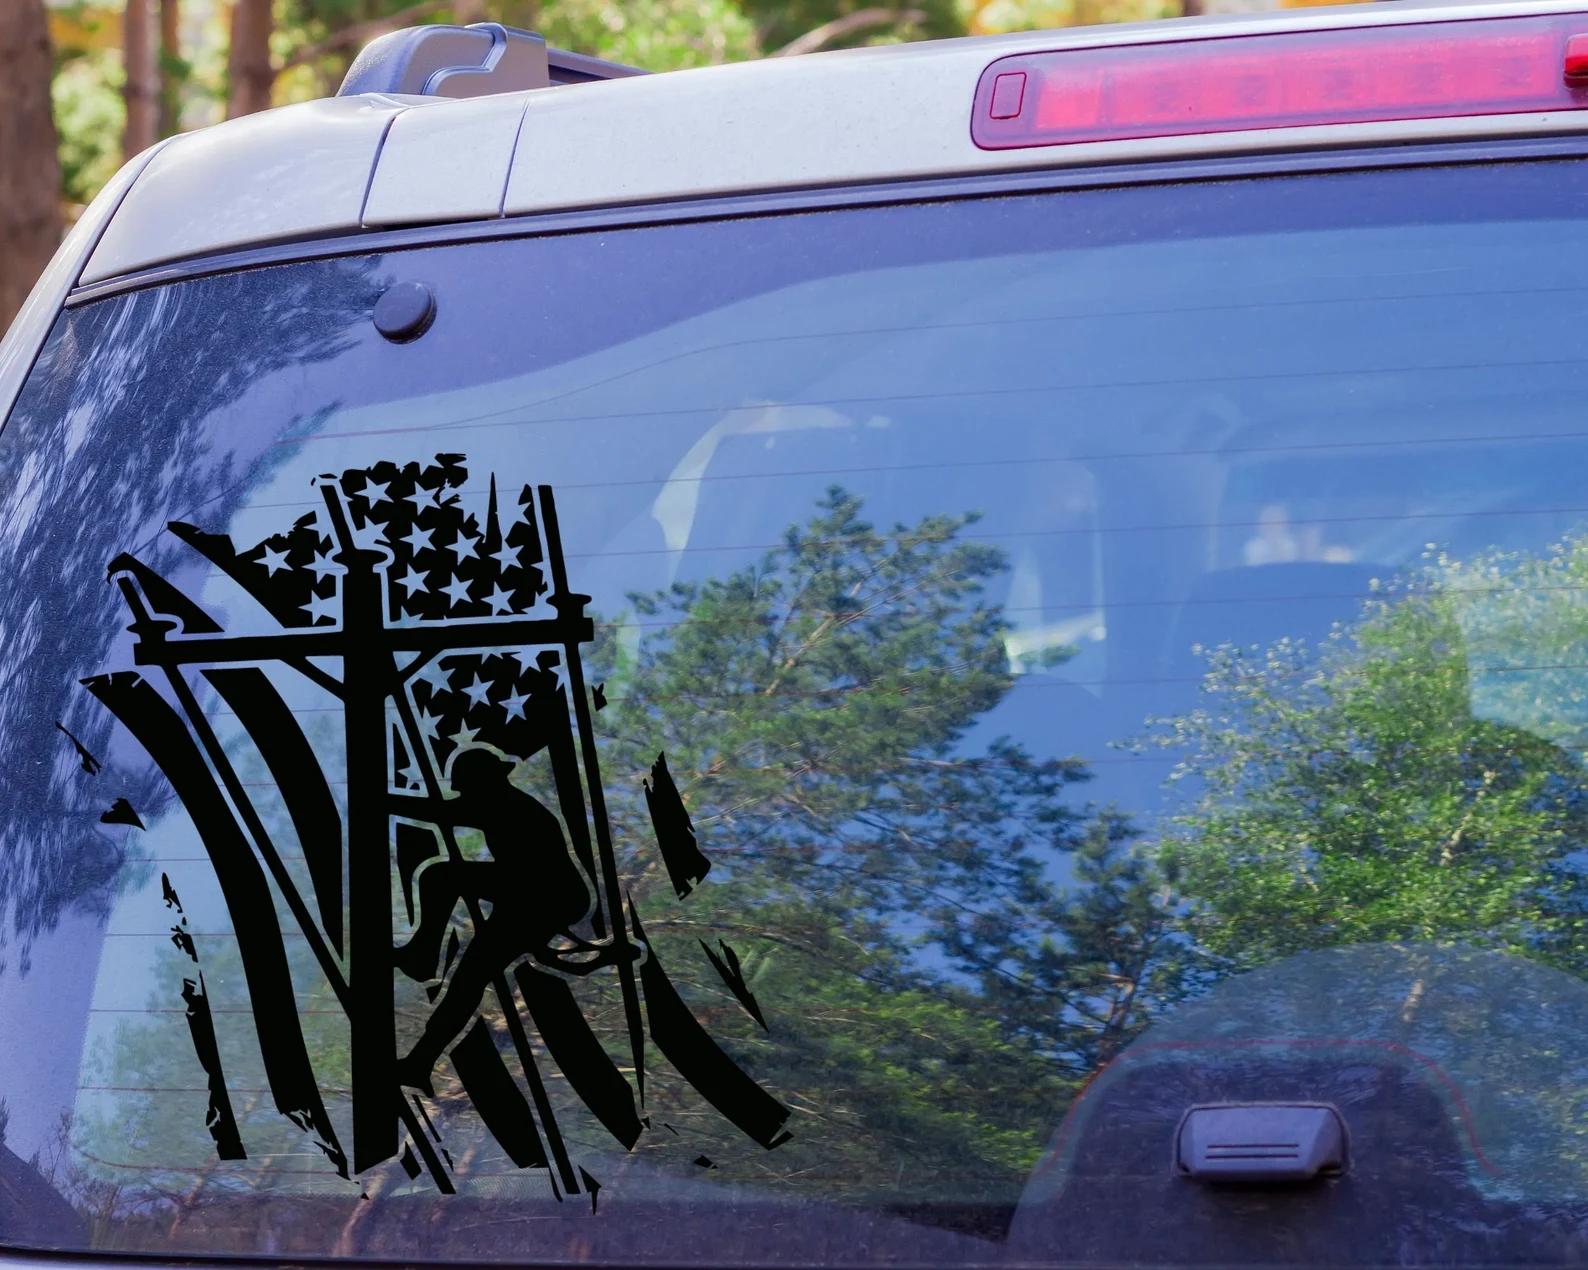 Lineman logo on the car window.